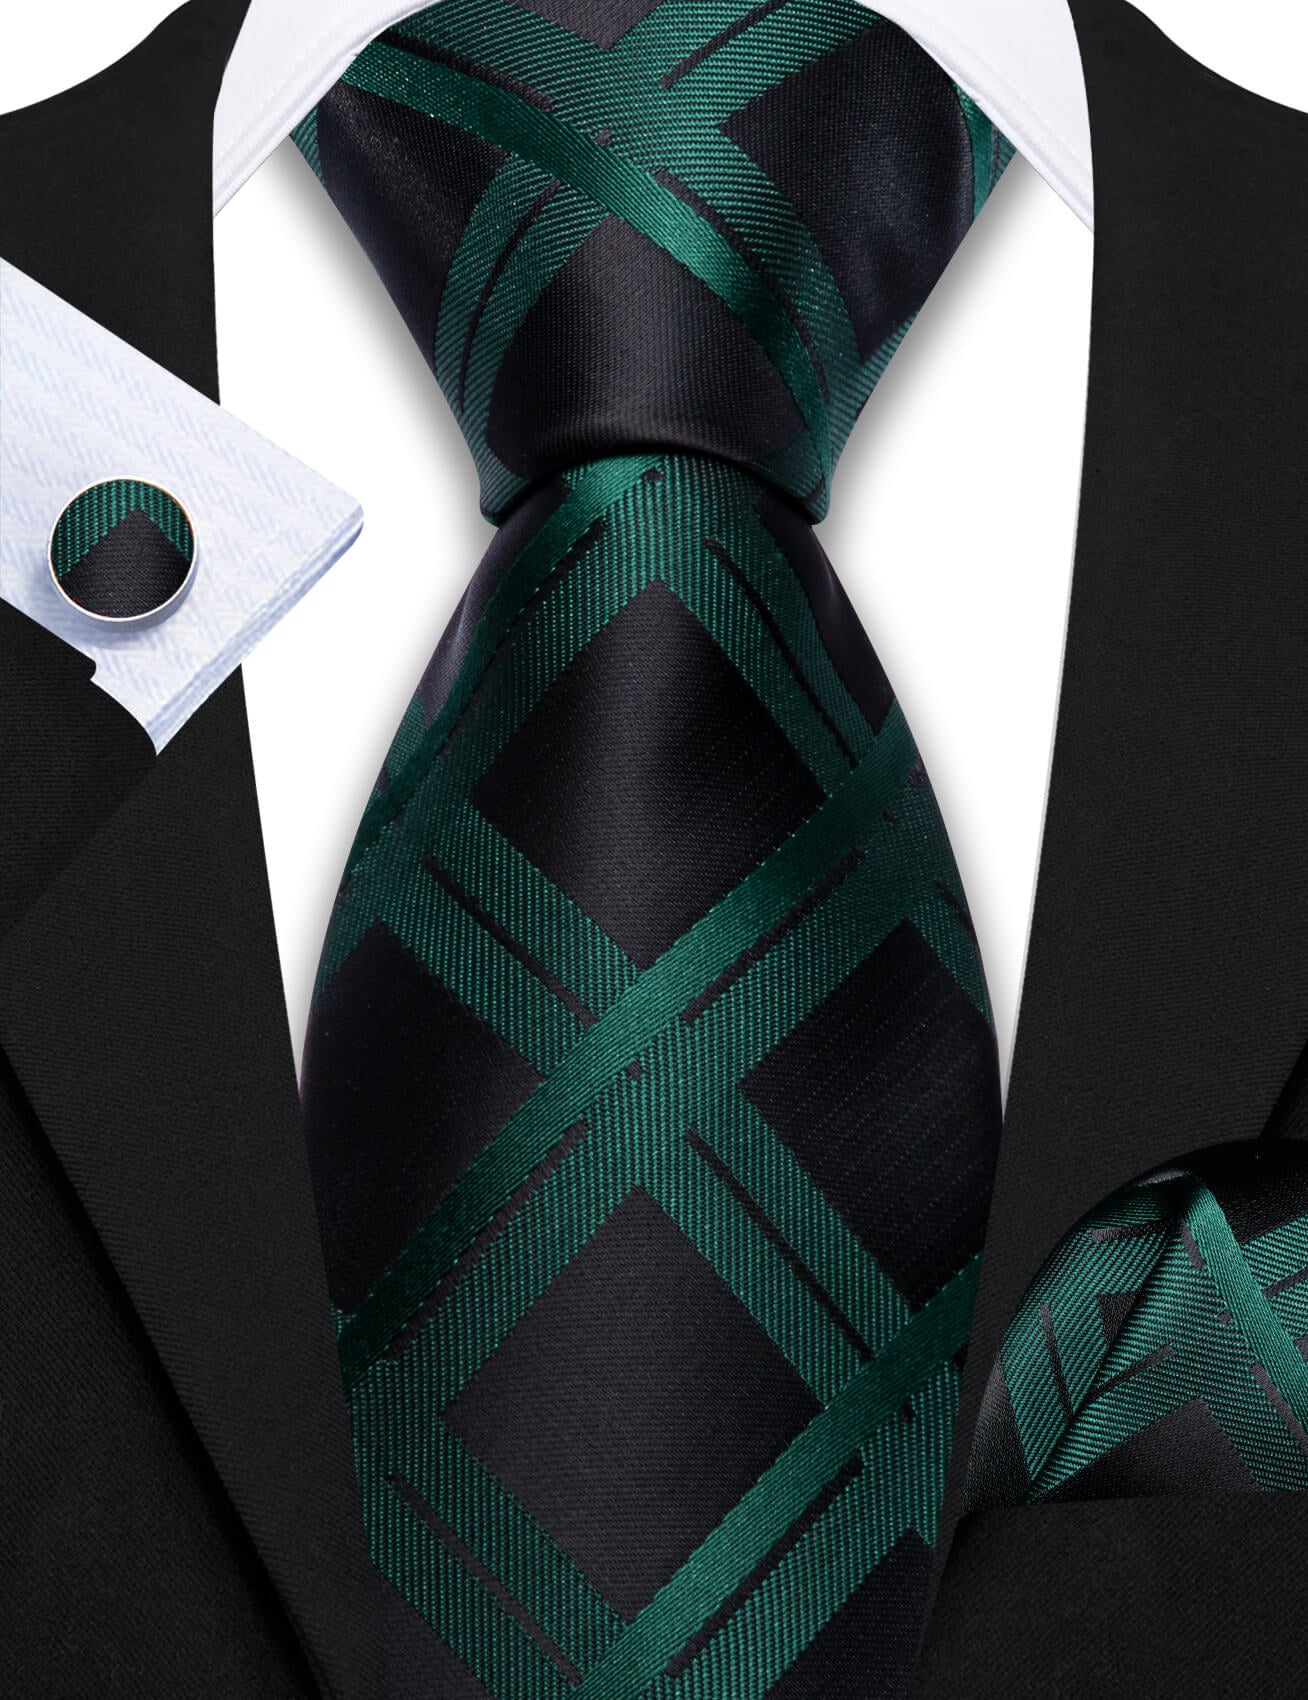 Barry.wang Plaid Tie Black Dark Green Men’s Silk Tie Hanky Cufflinks Set New Arrival